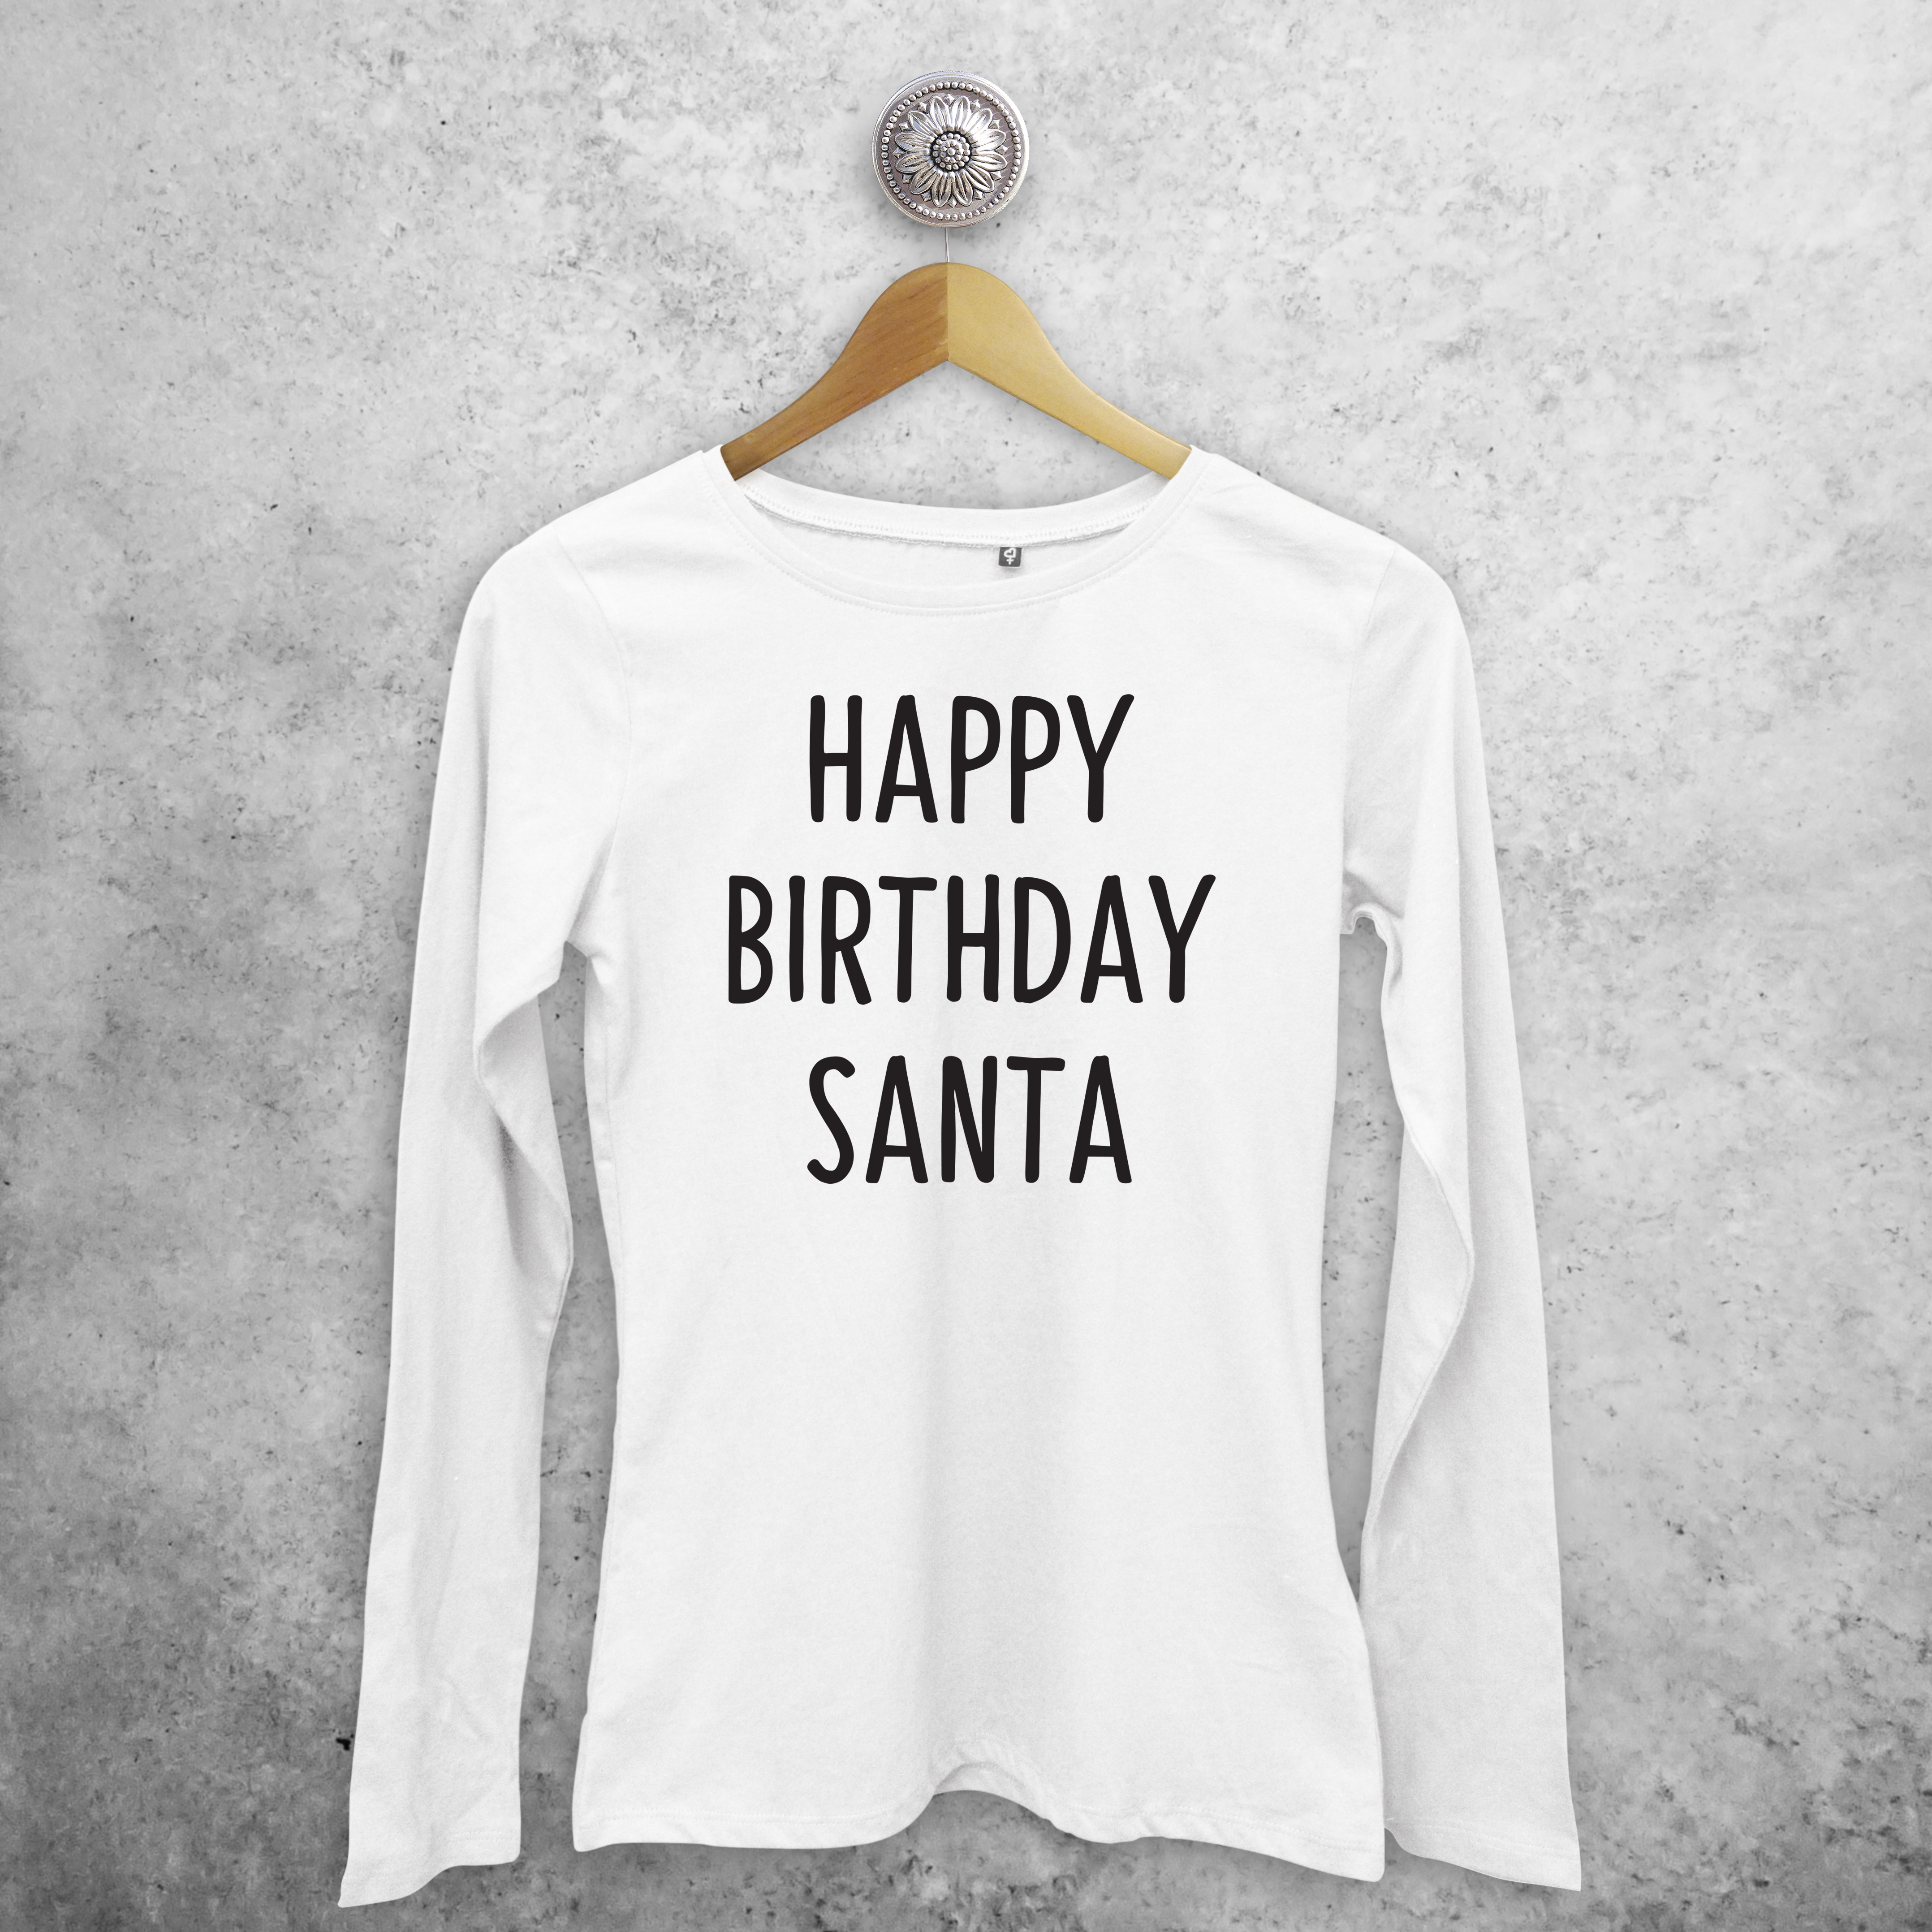 'Happy birthday Santa' adult longsleeve shirt